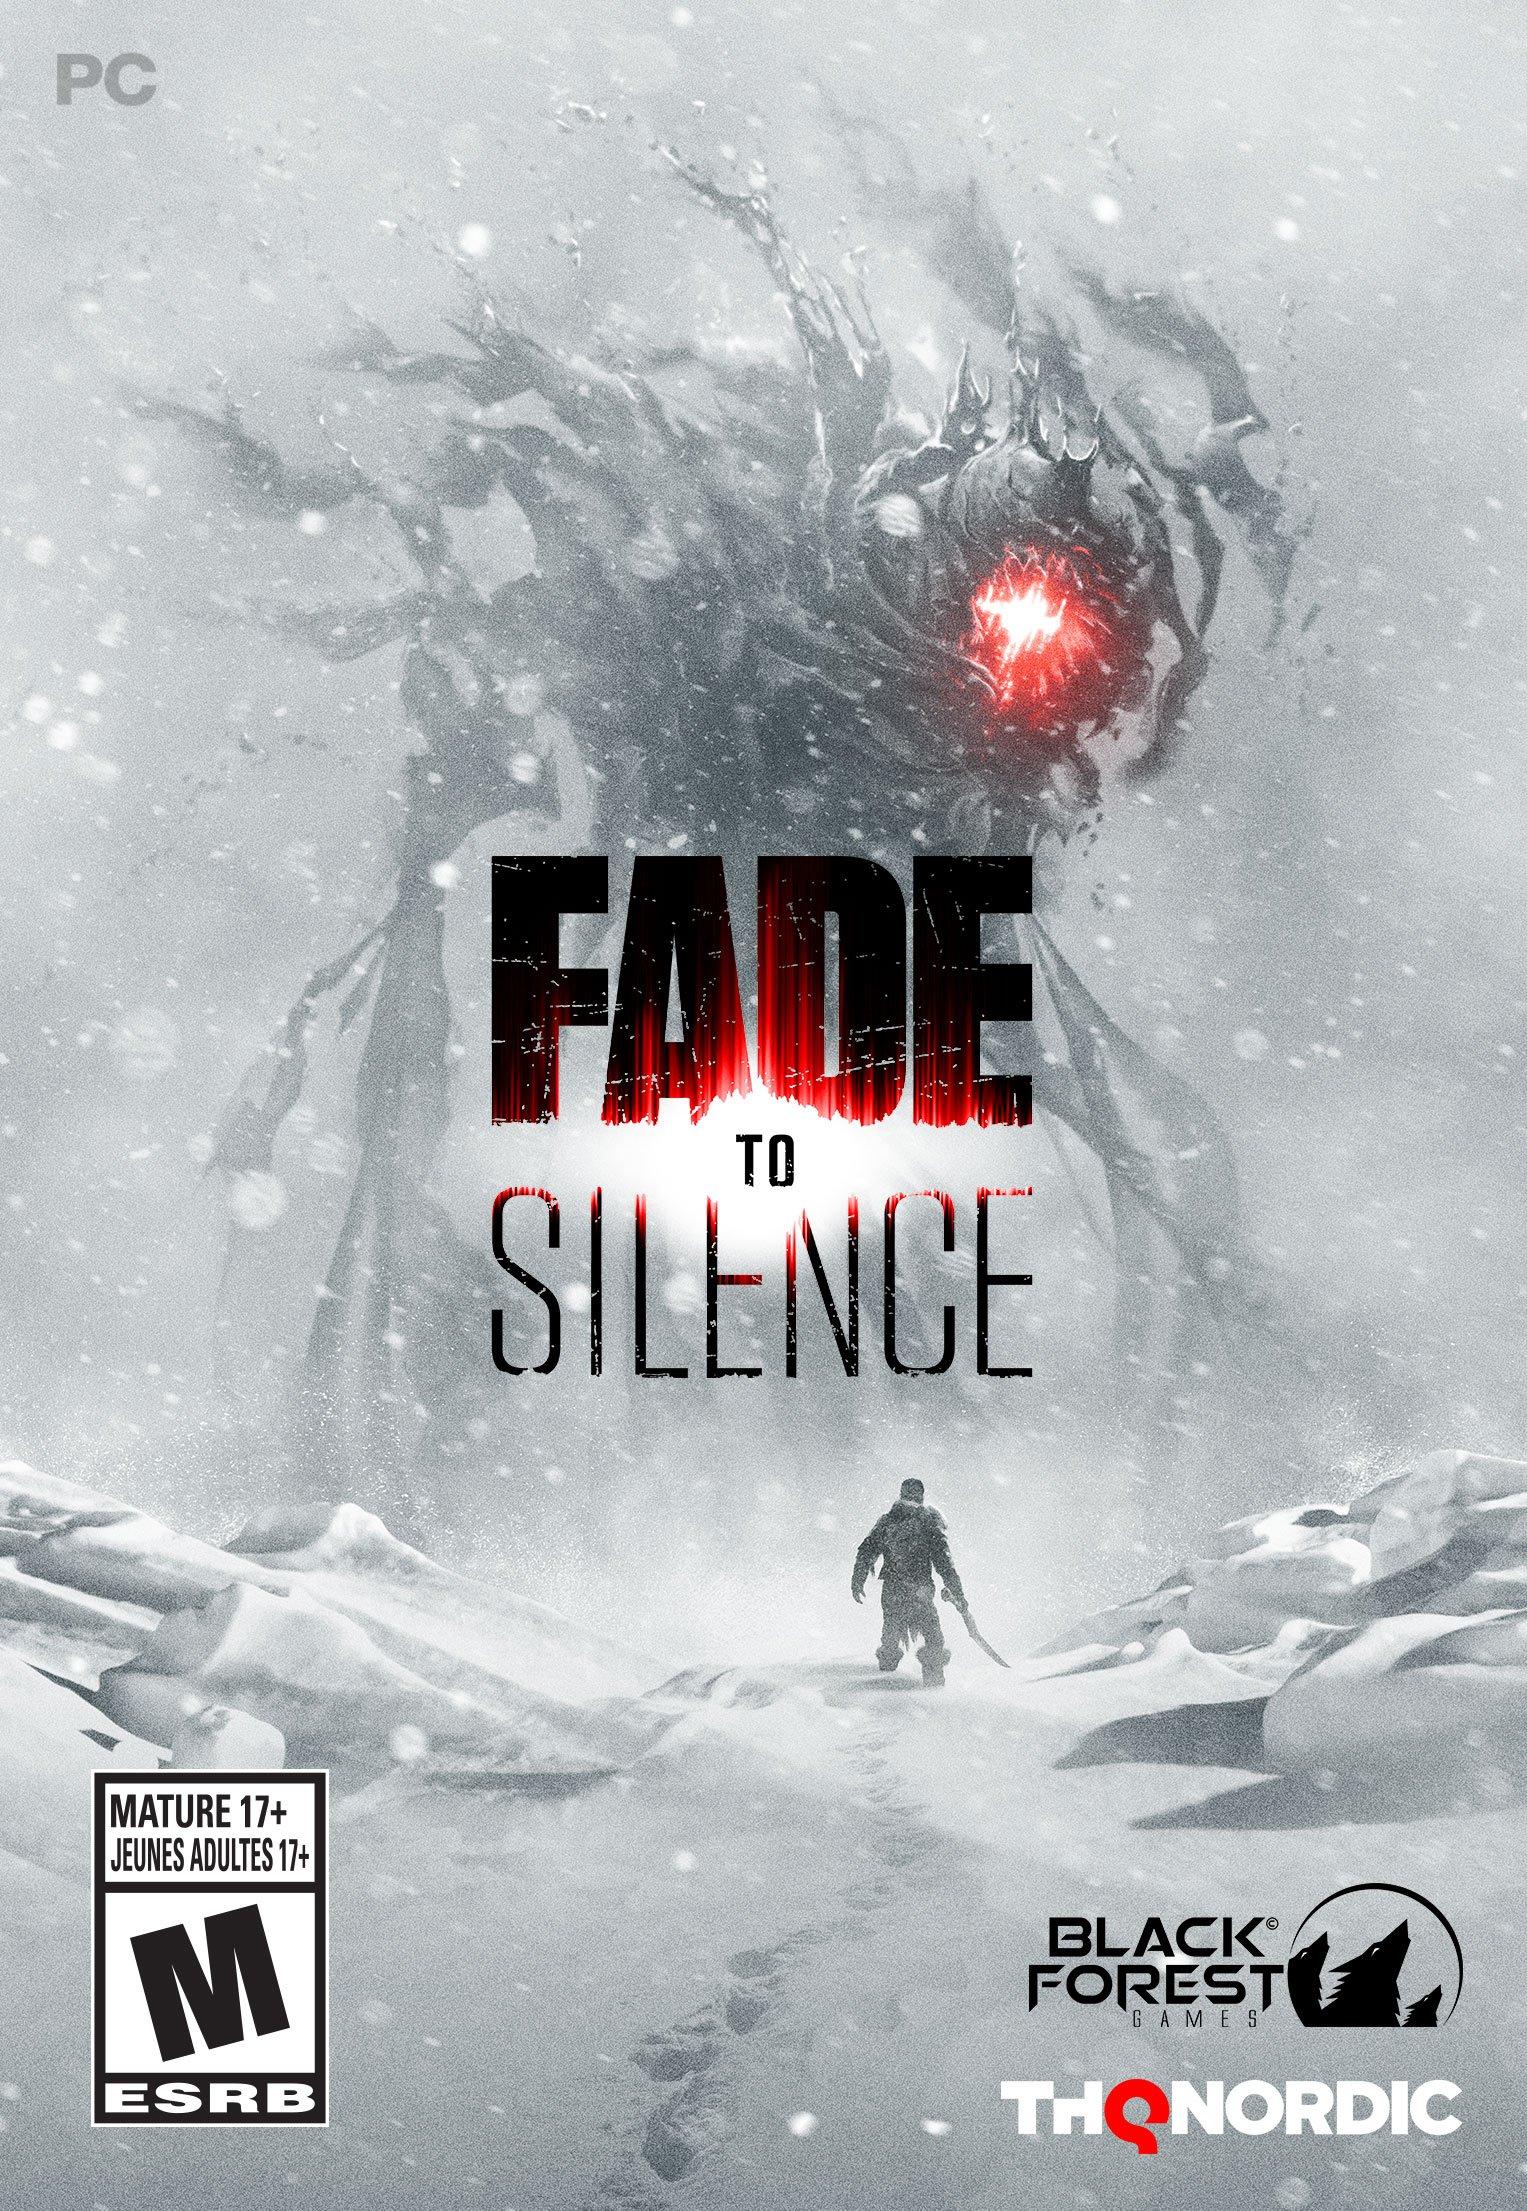 Fade to Silence - PC